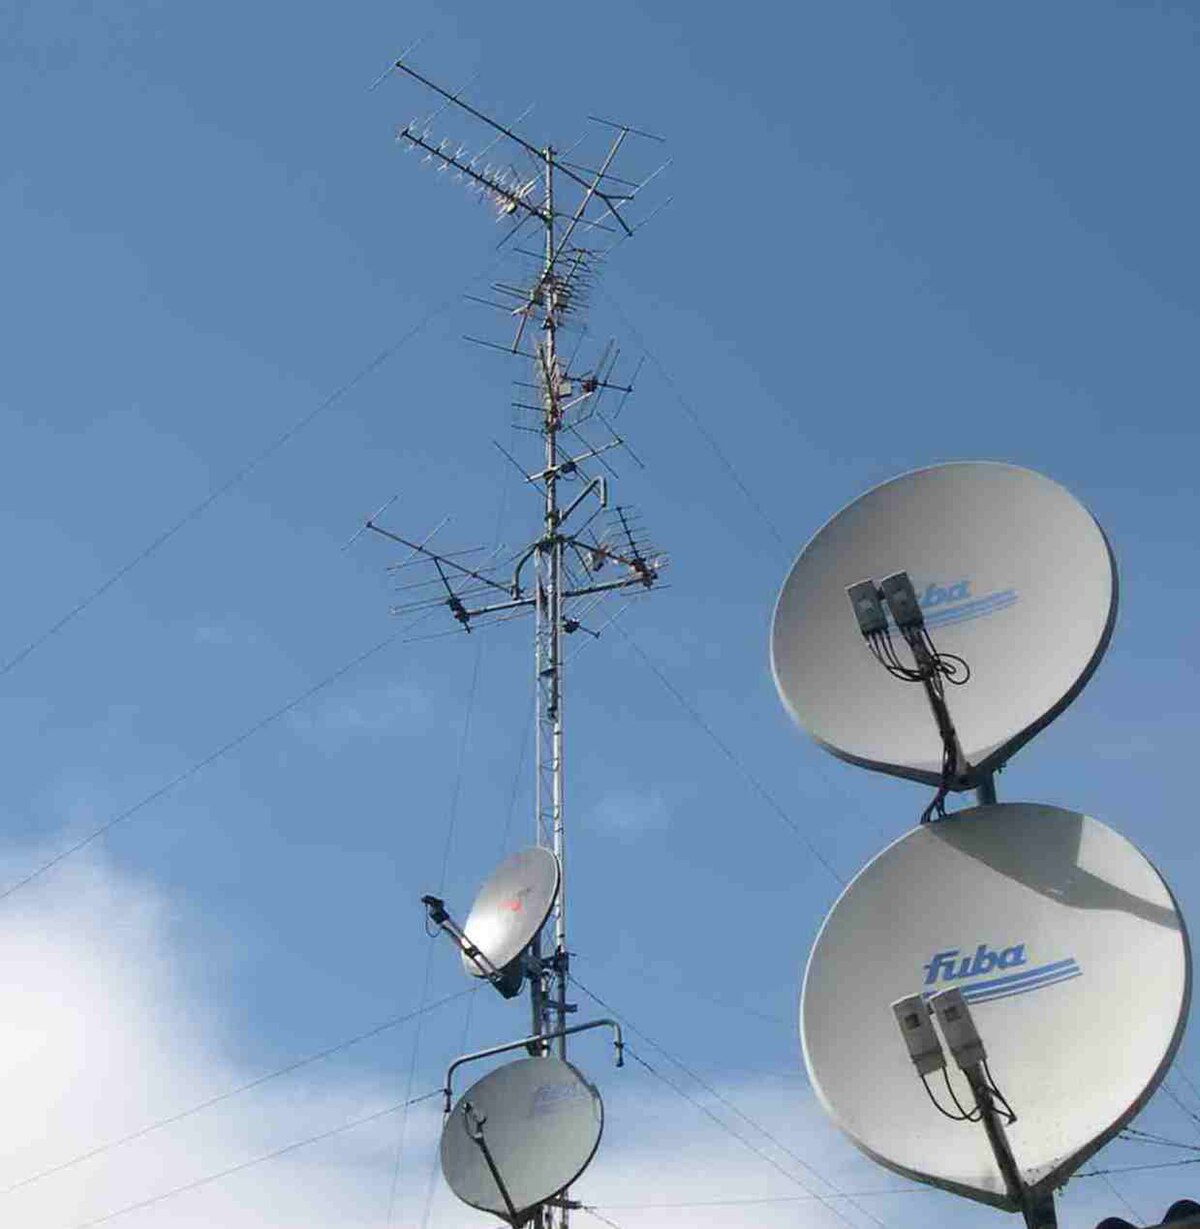 File:Antennes radiodiffusion.jpg - Wikimedia Commons